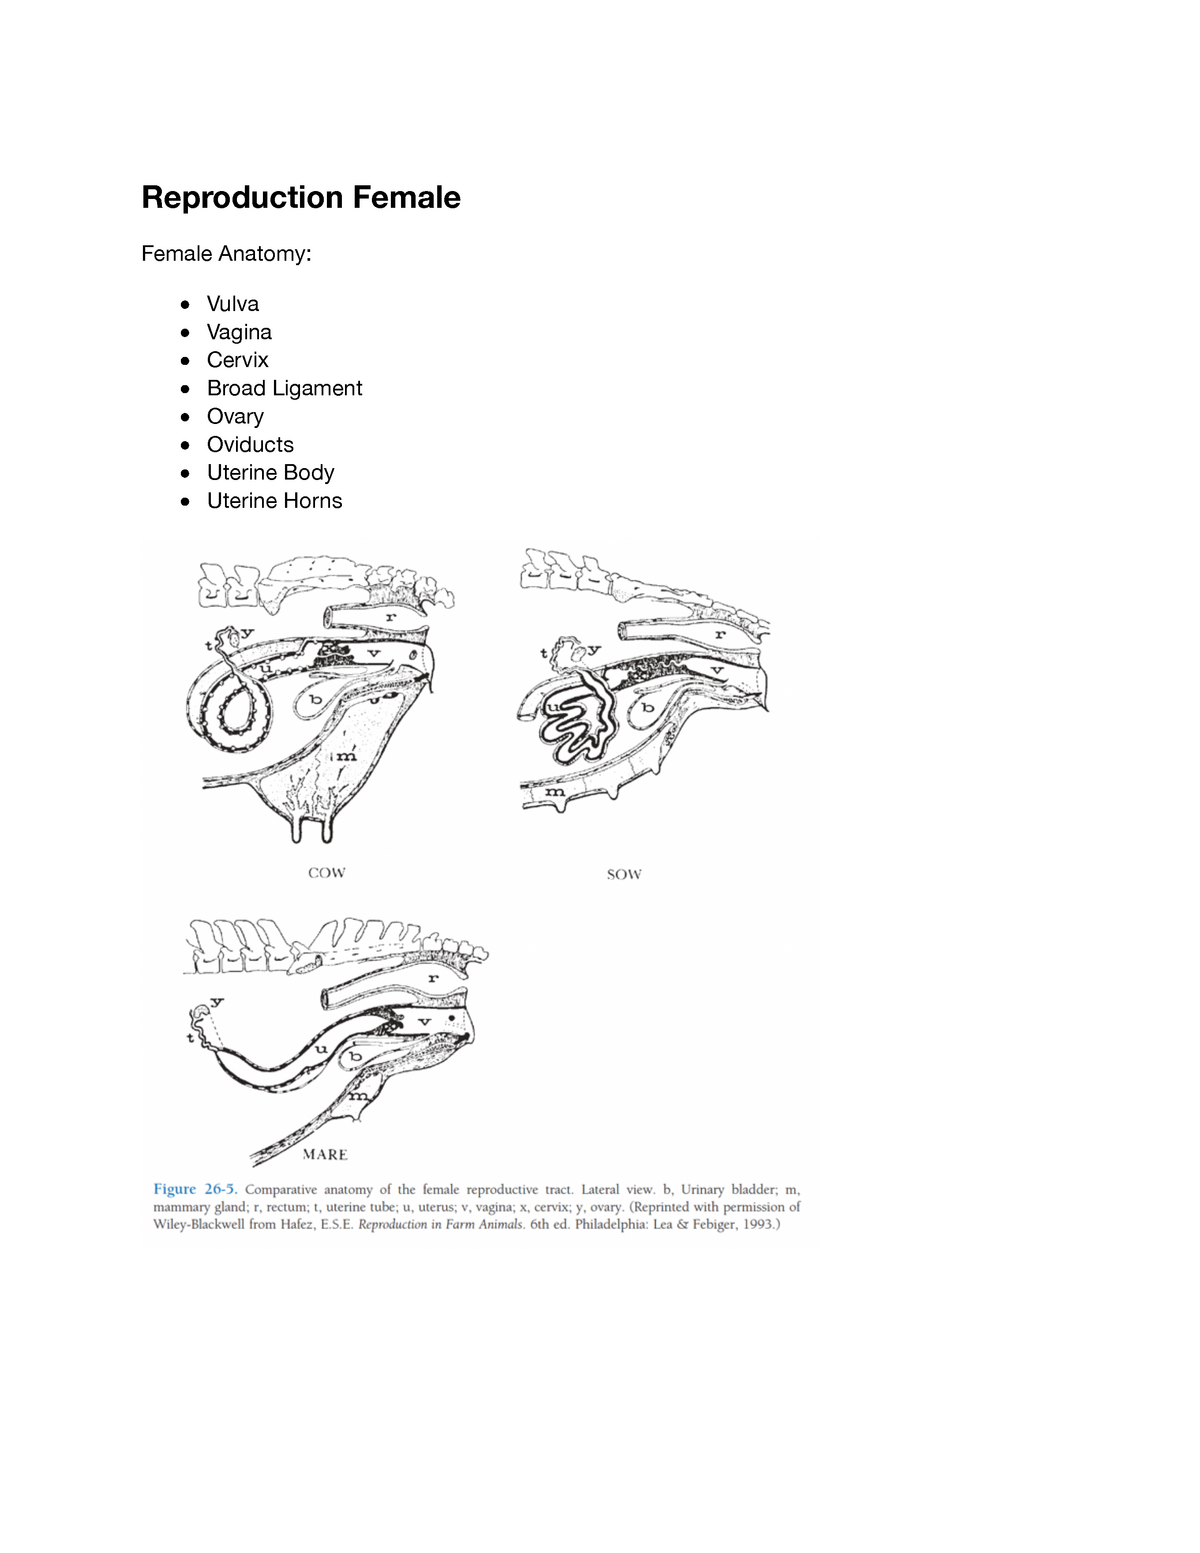 Female Animal Reproduction - Reproduction Female Female Anatomy: Vulva  Vagina Cervix Broad Ligament - Studocu